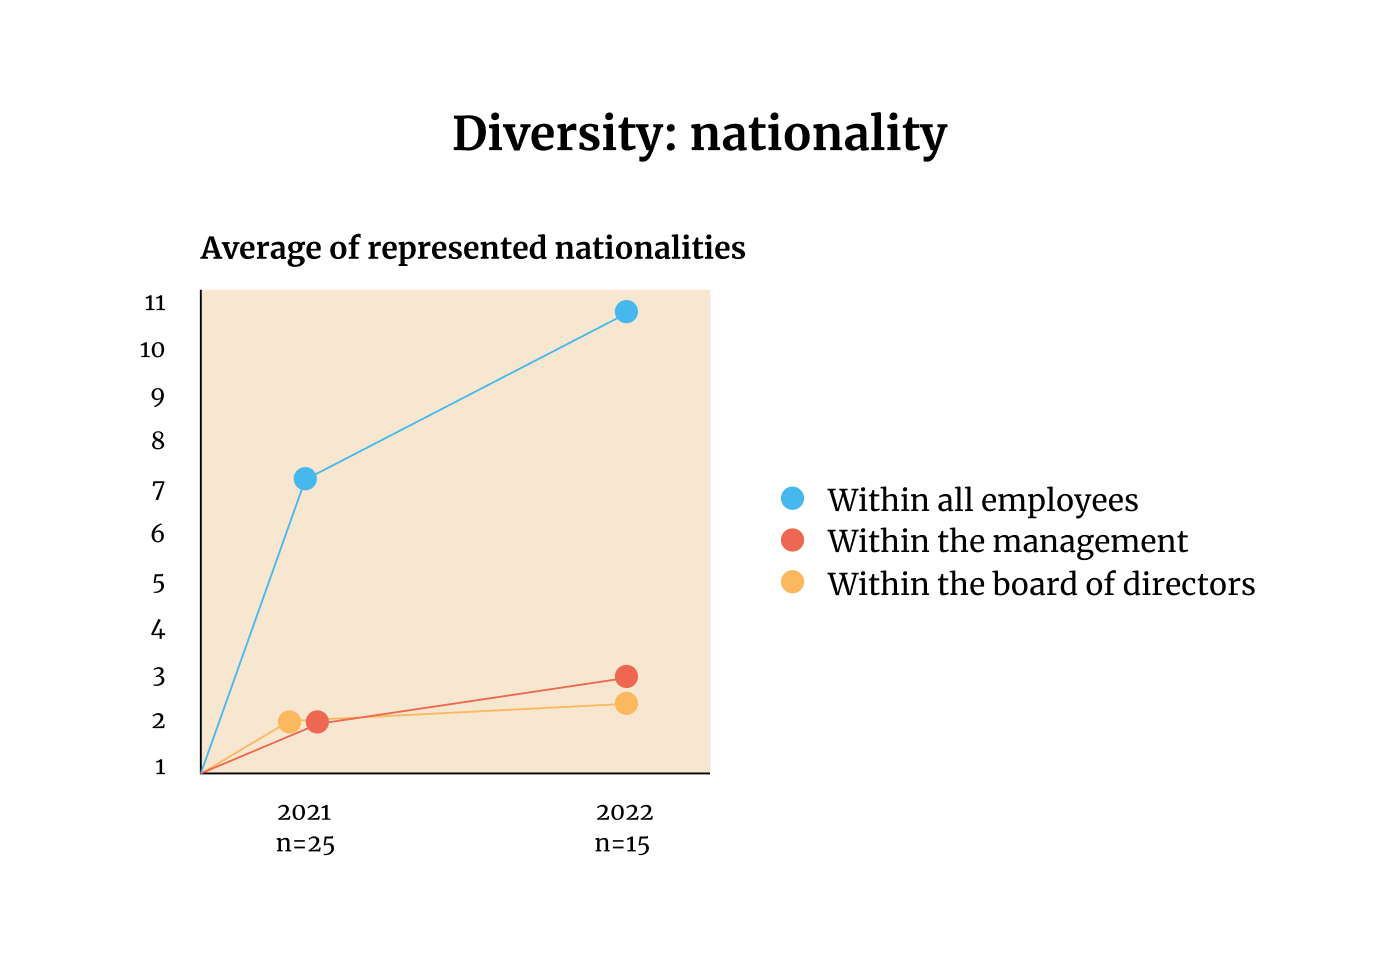 ESG Survey - Diversity: Nationality